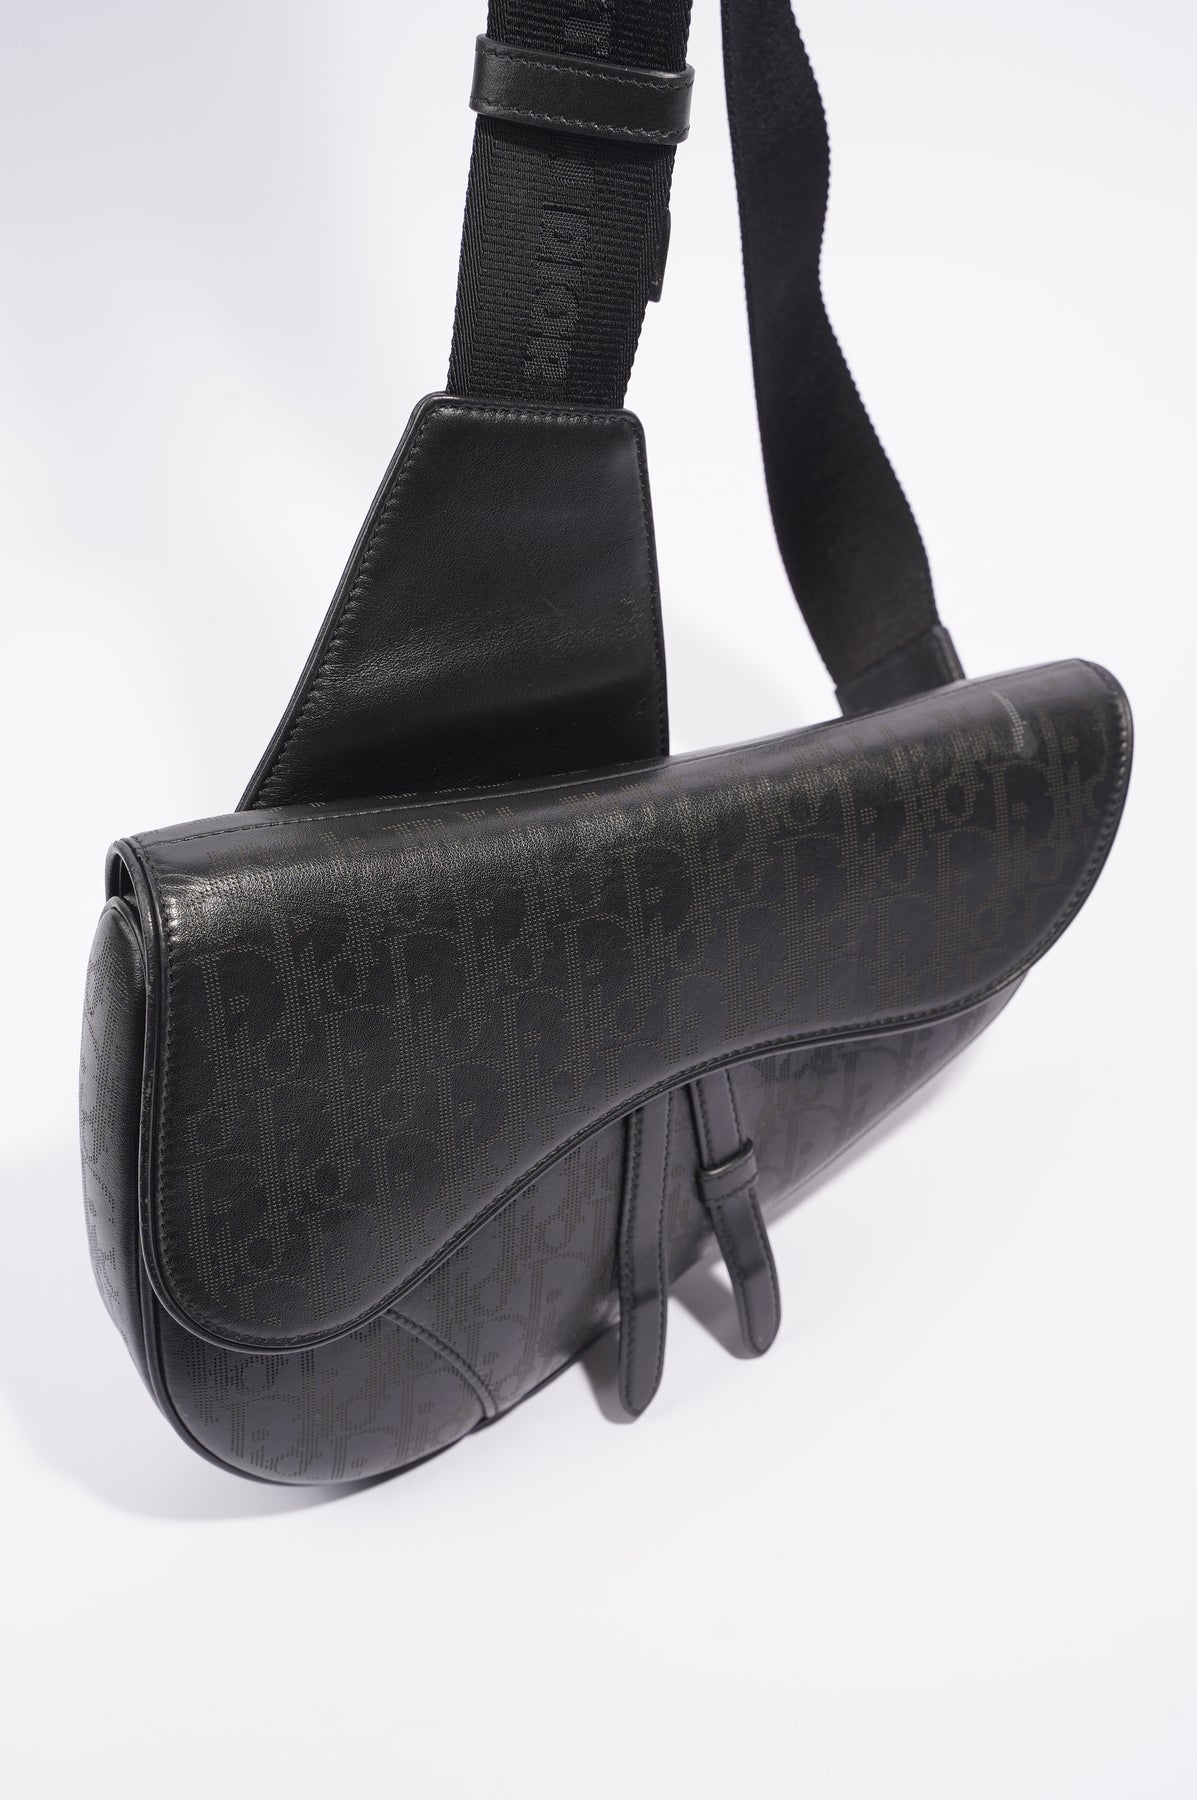 Christian Dior Homme Leather Ziparound Clutch Bag Pouch Black Men T1243   eBay